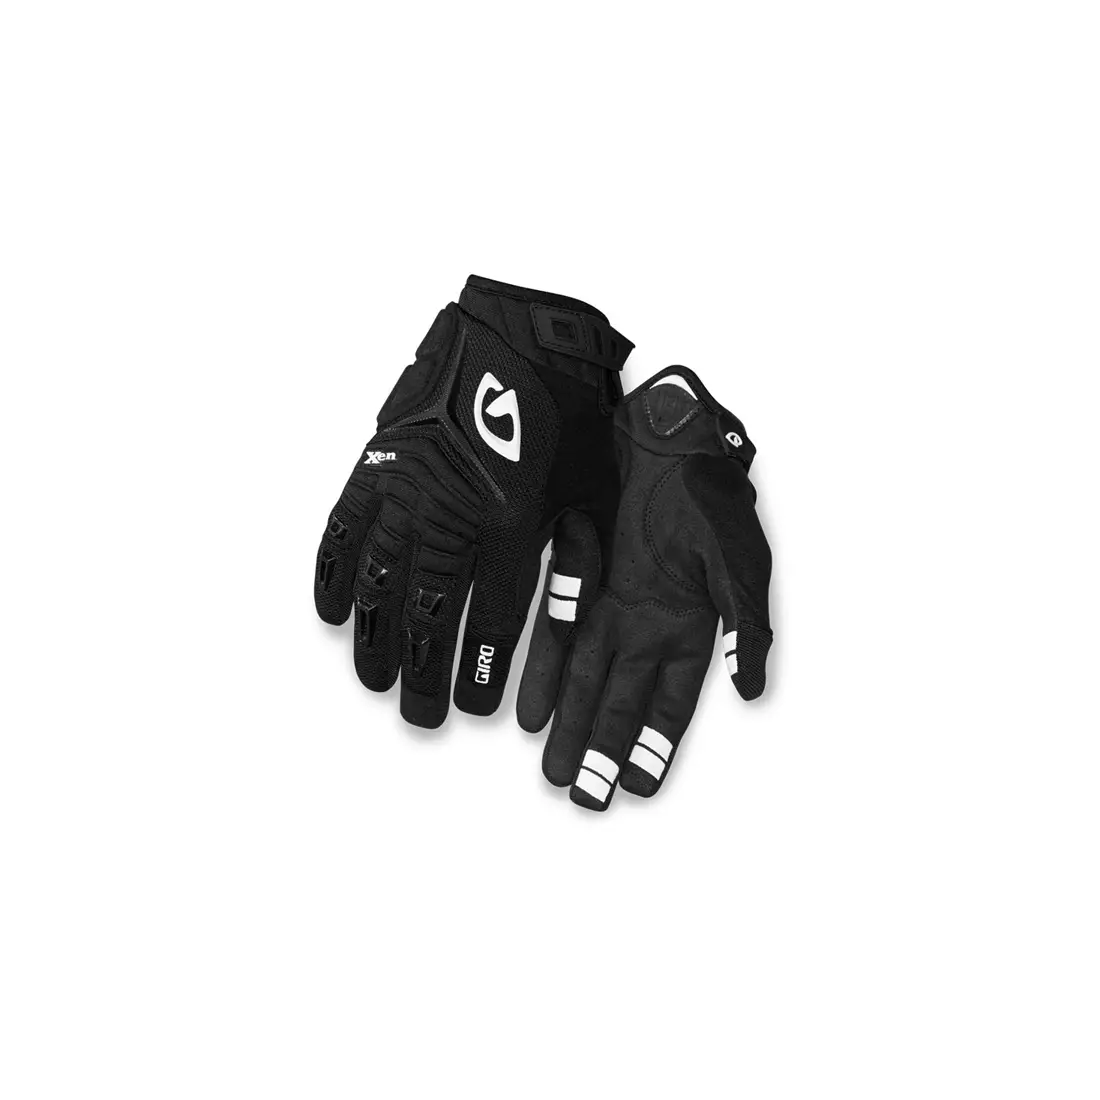 GIRO XEN cycling gloves, black and white